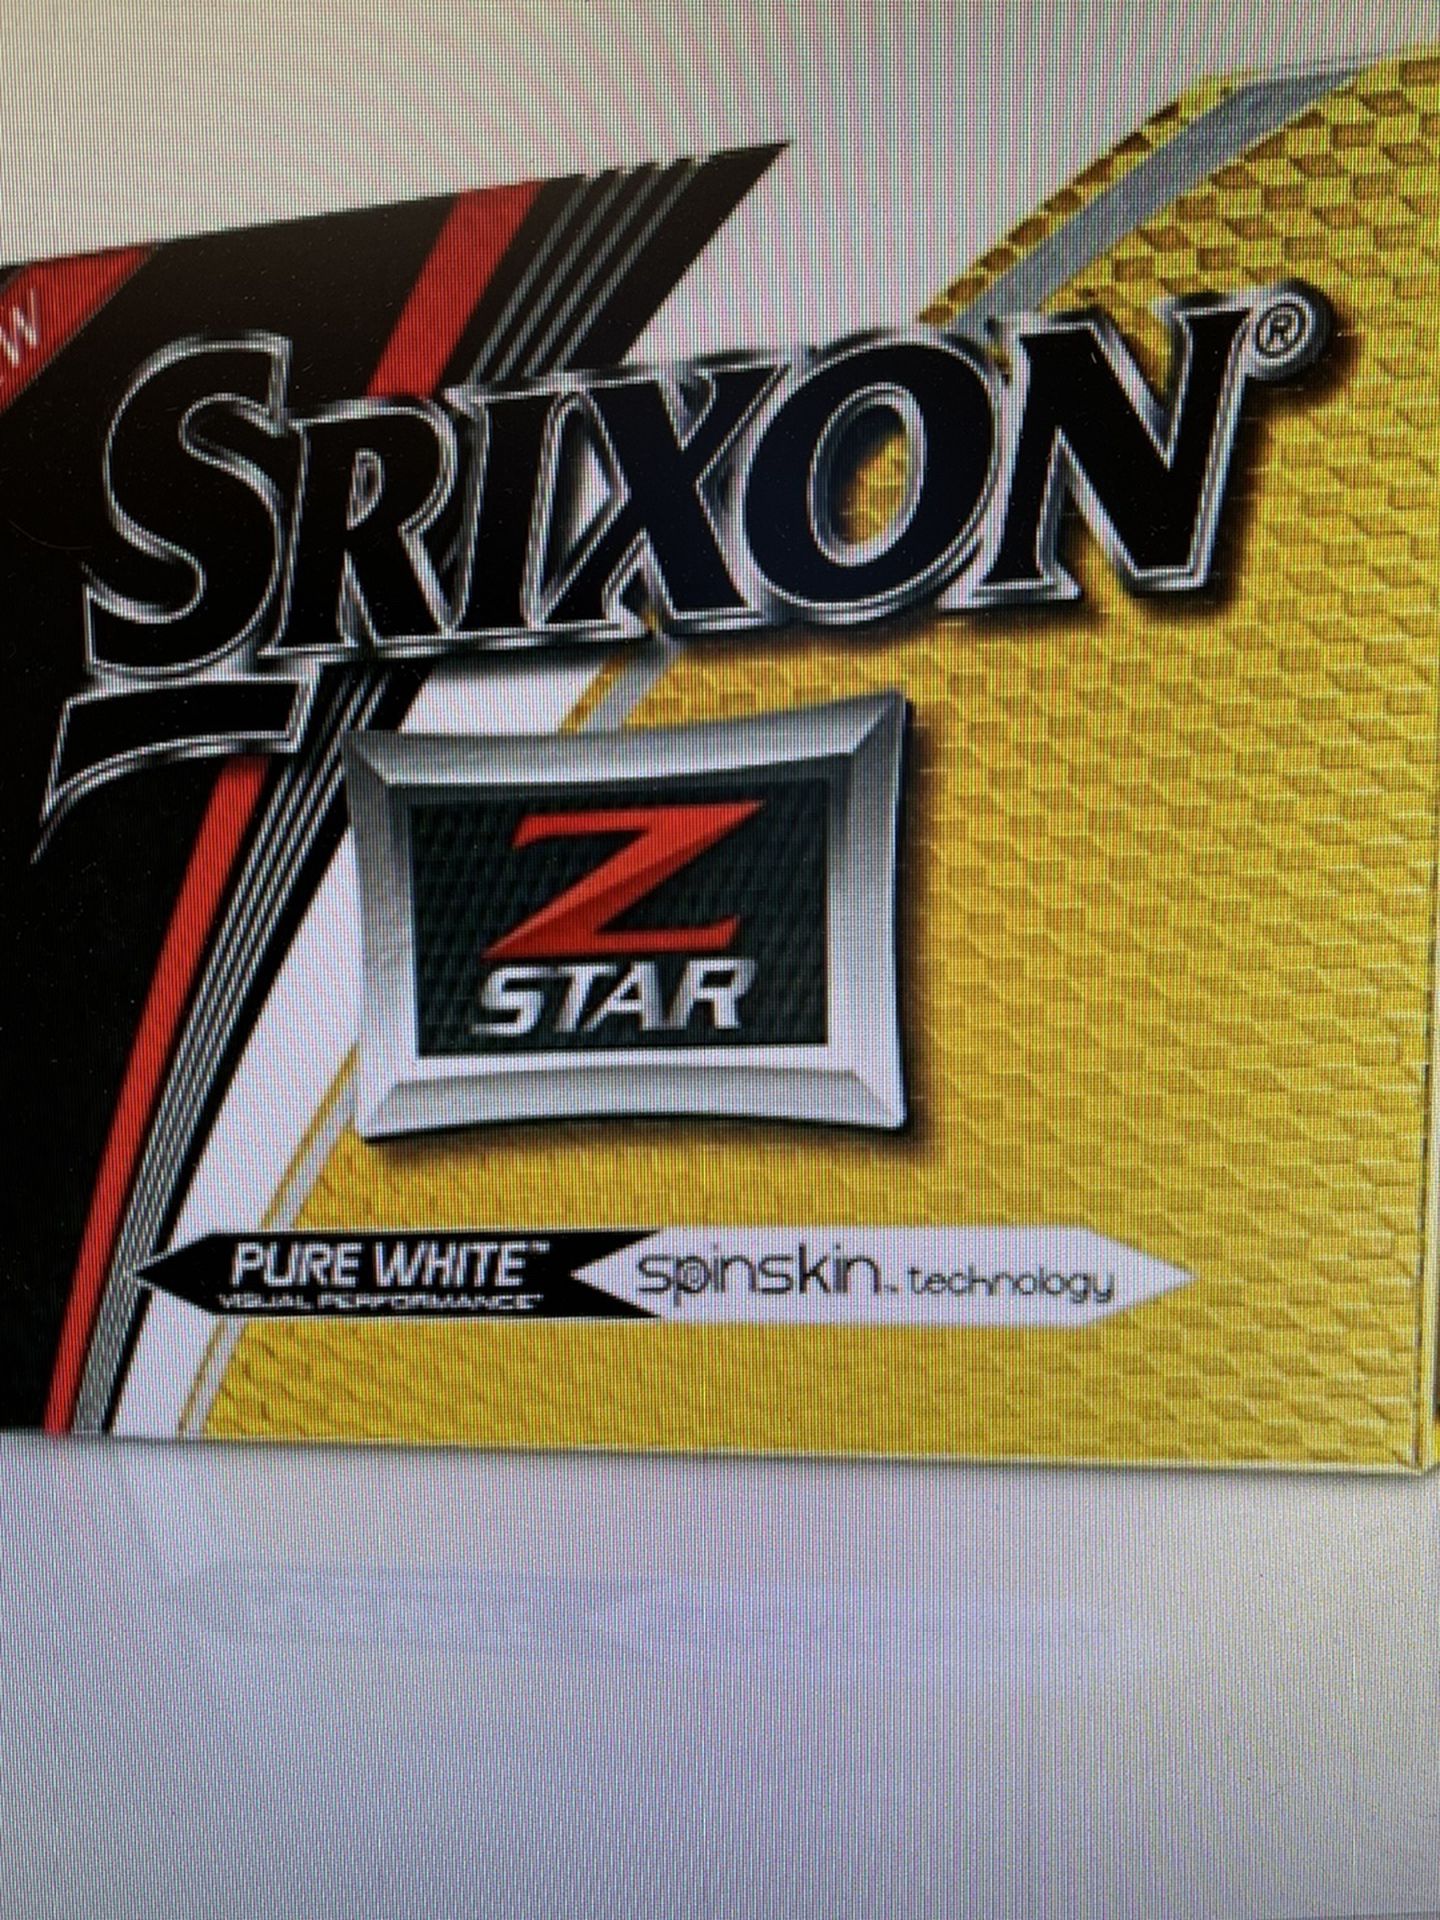 Srixon Z Star Golf Balls, Brand New